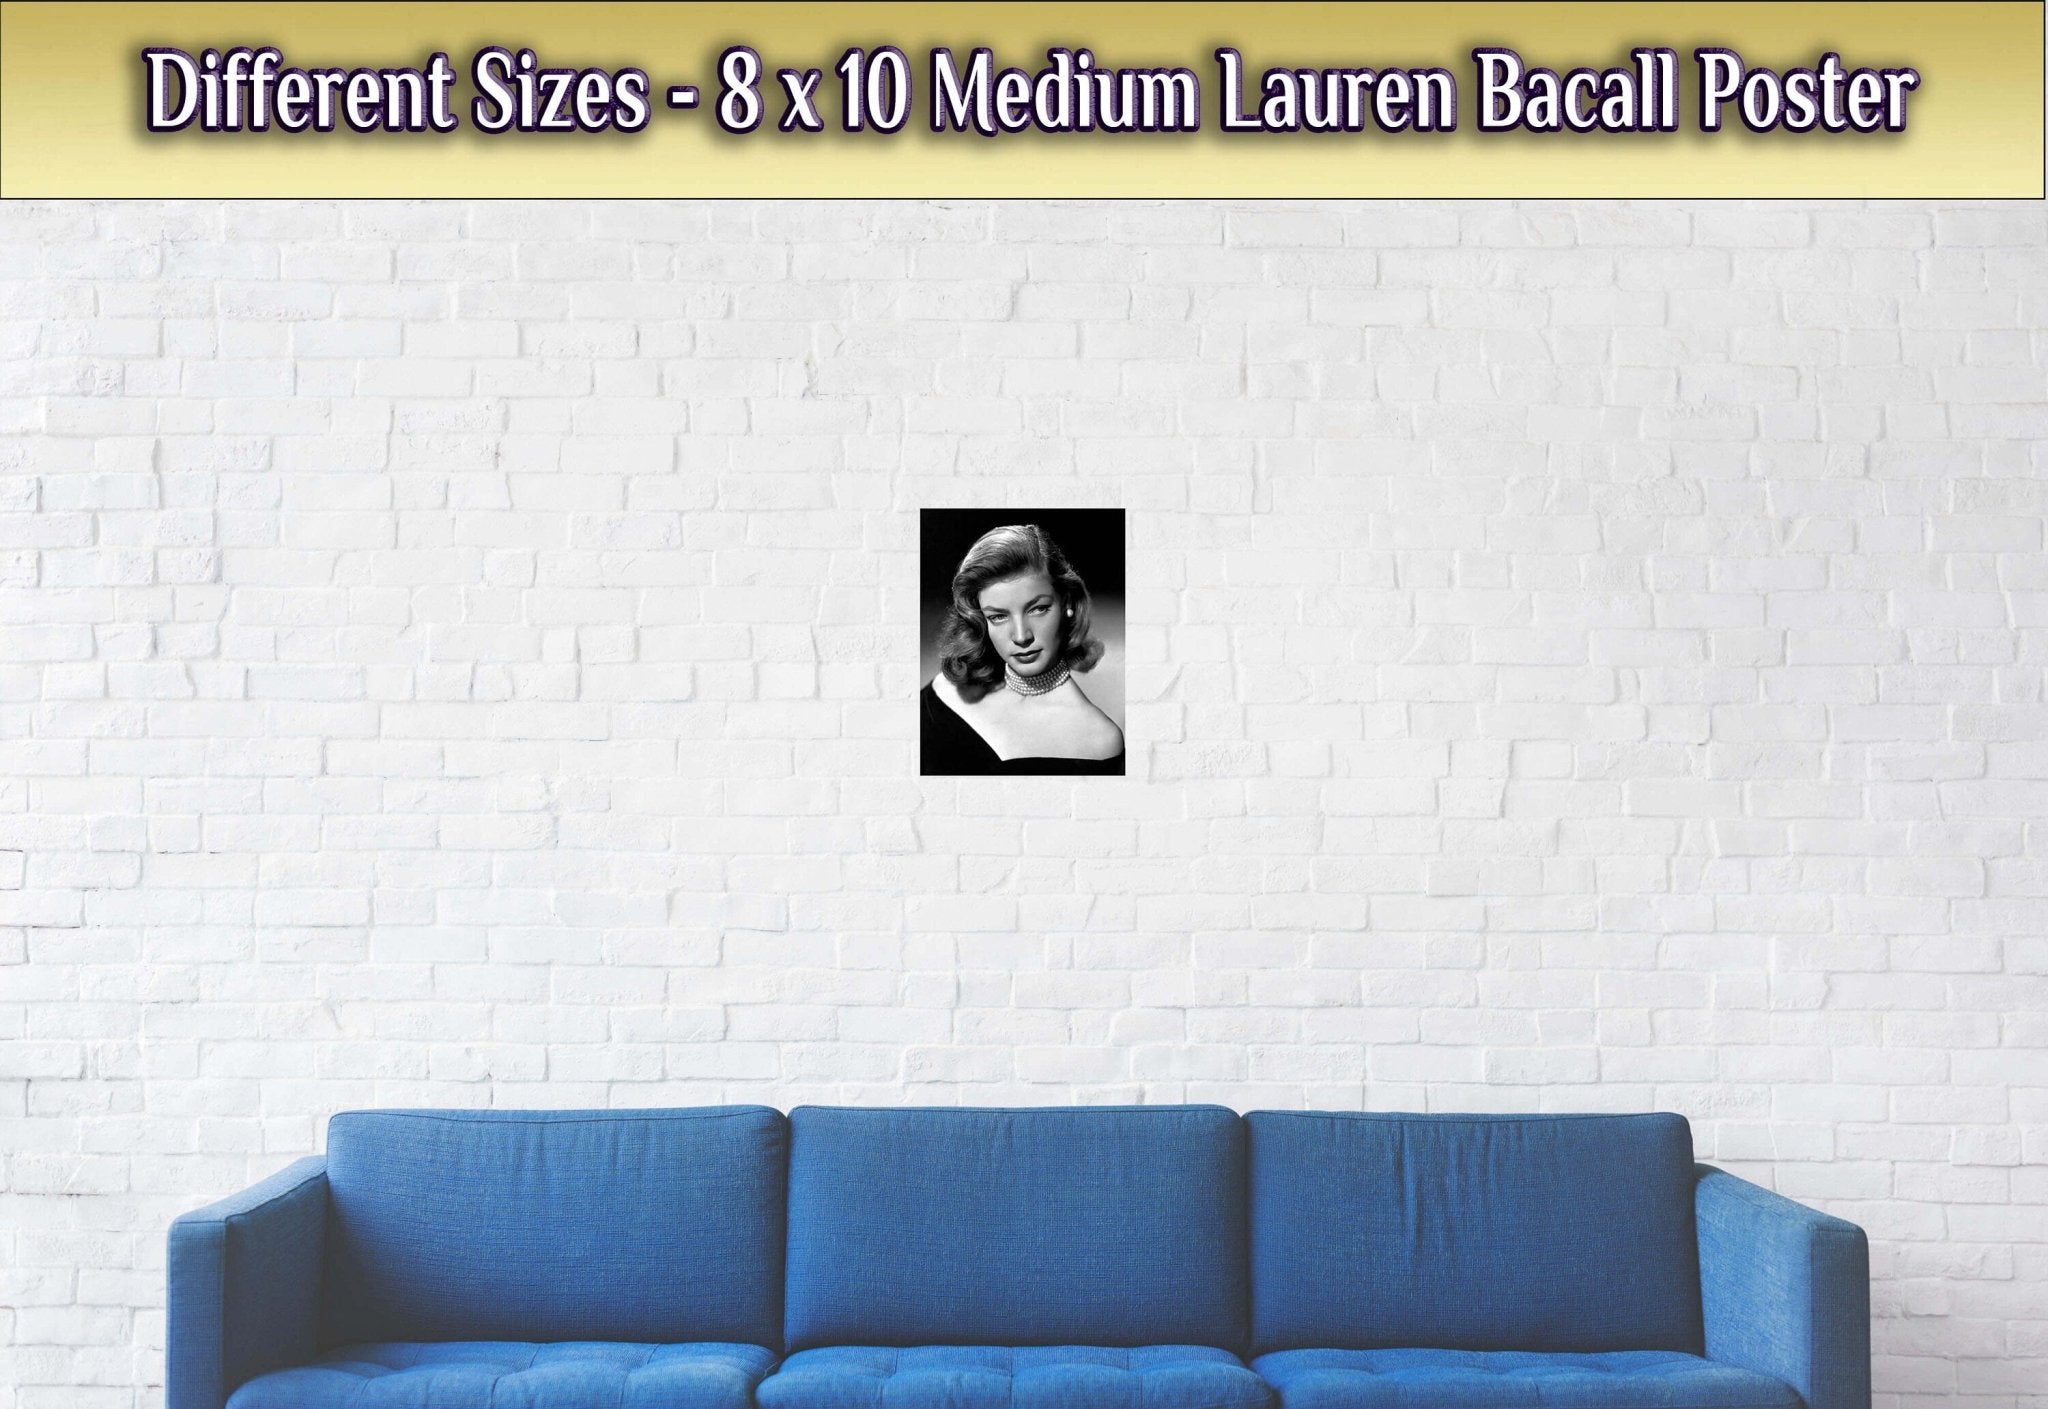 Lauren Bacall Poster, Sexiest Star #6, Vintage Photo - Iconic Lauren Bacall Print - Hollywood Silver Screen Star - WallArtPrints4U